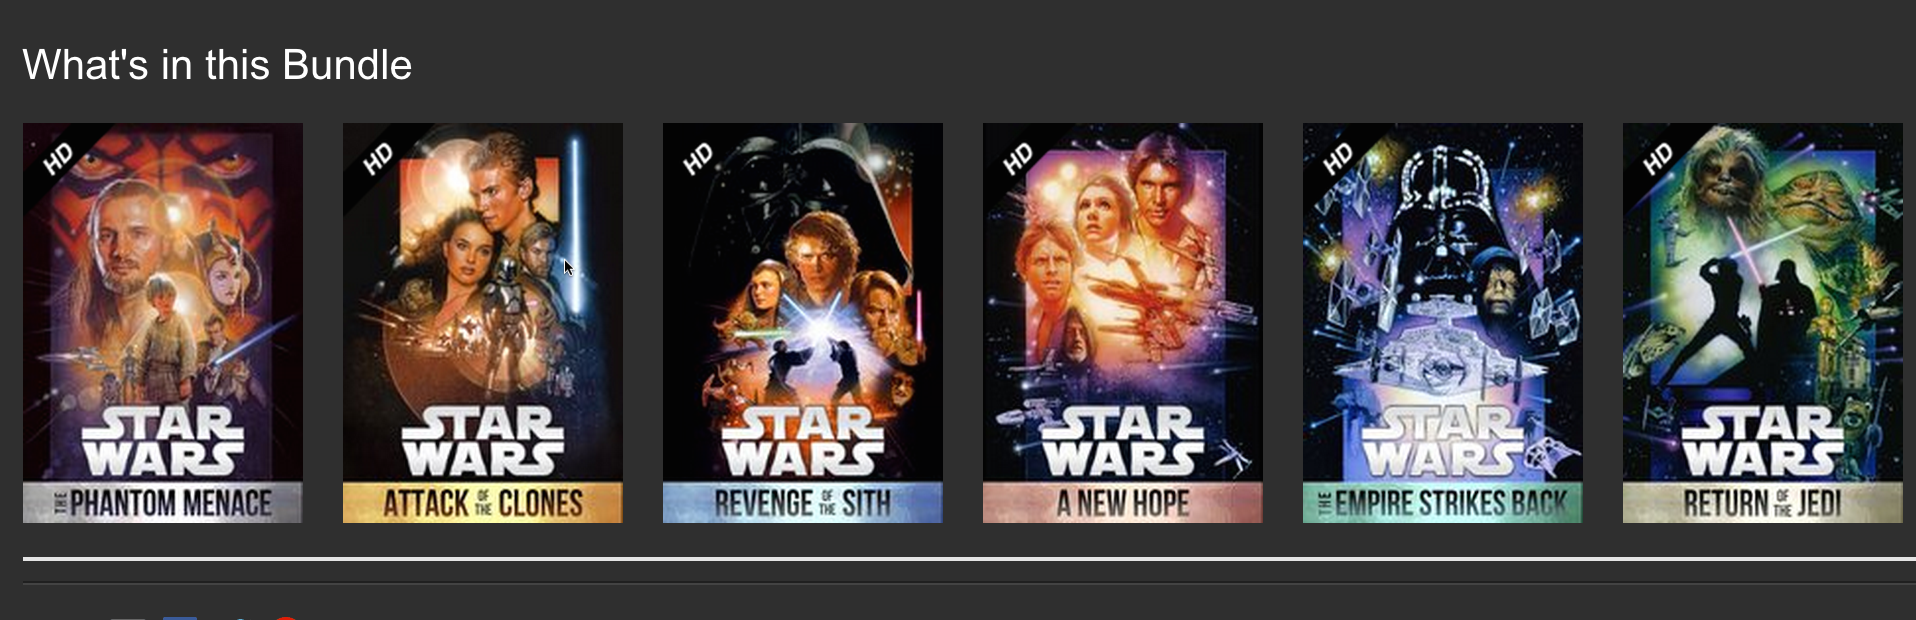 Star Wars Films To Finally Become Digital Downloads